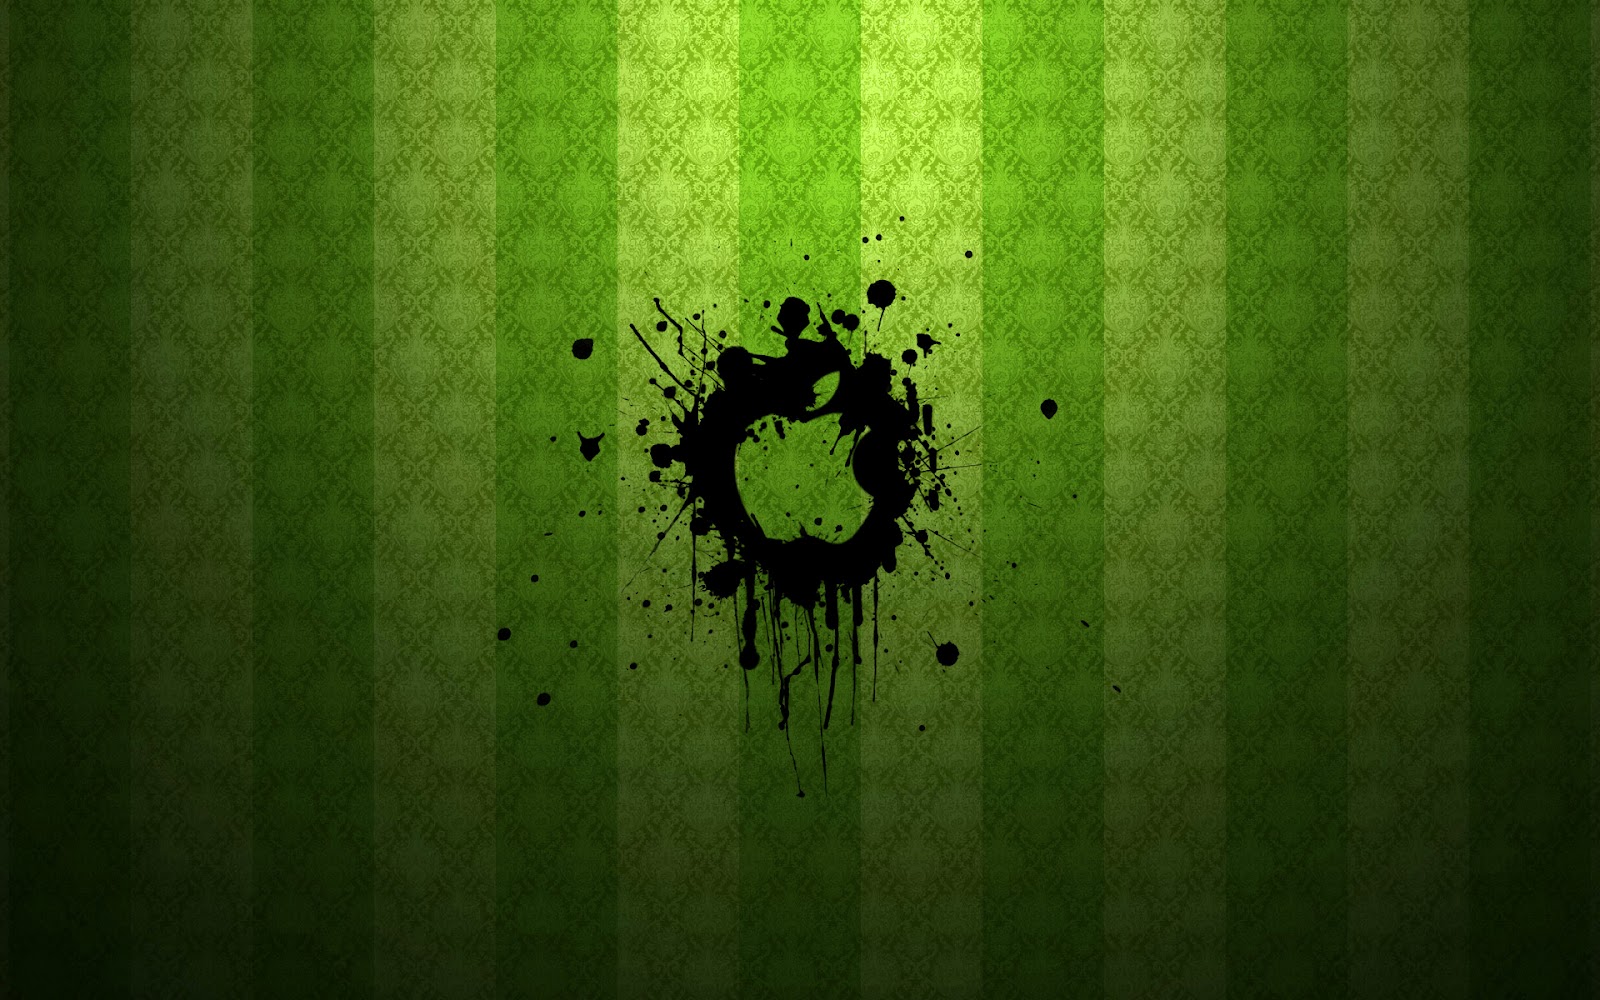 http://1.bp.blogspot.com/-fP_2nGhClHI/UD3TZb3s2eI/AAAAAAAAARc/wsdZAkv4VEY/s1600/Green+colour+wallpaper+with+apple+logo+in+black+shades.jpg